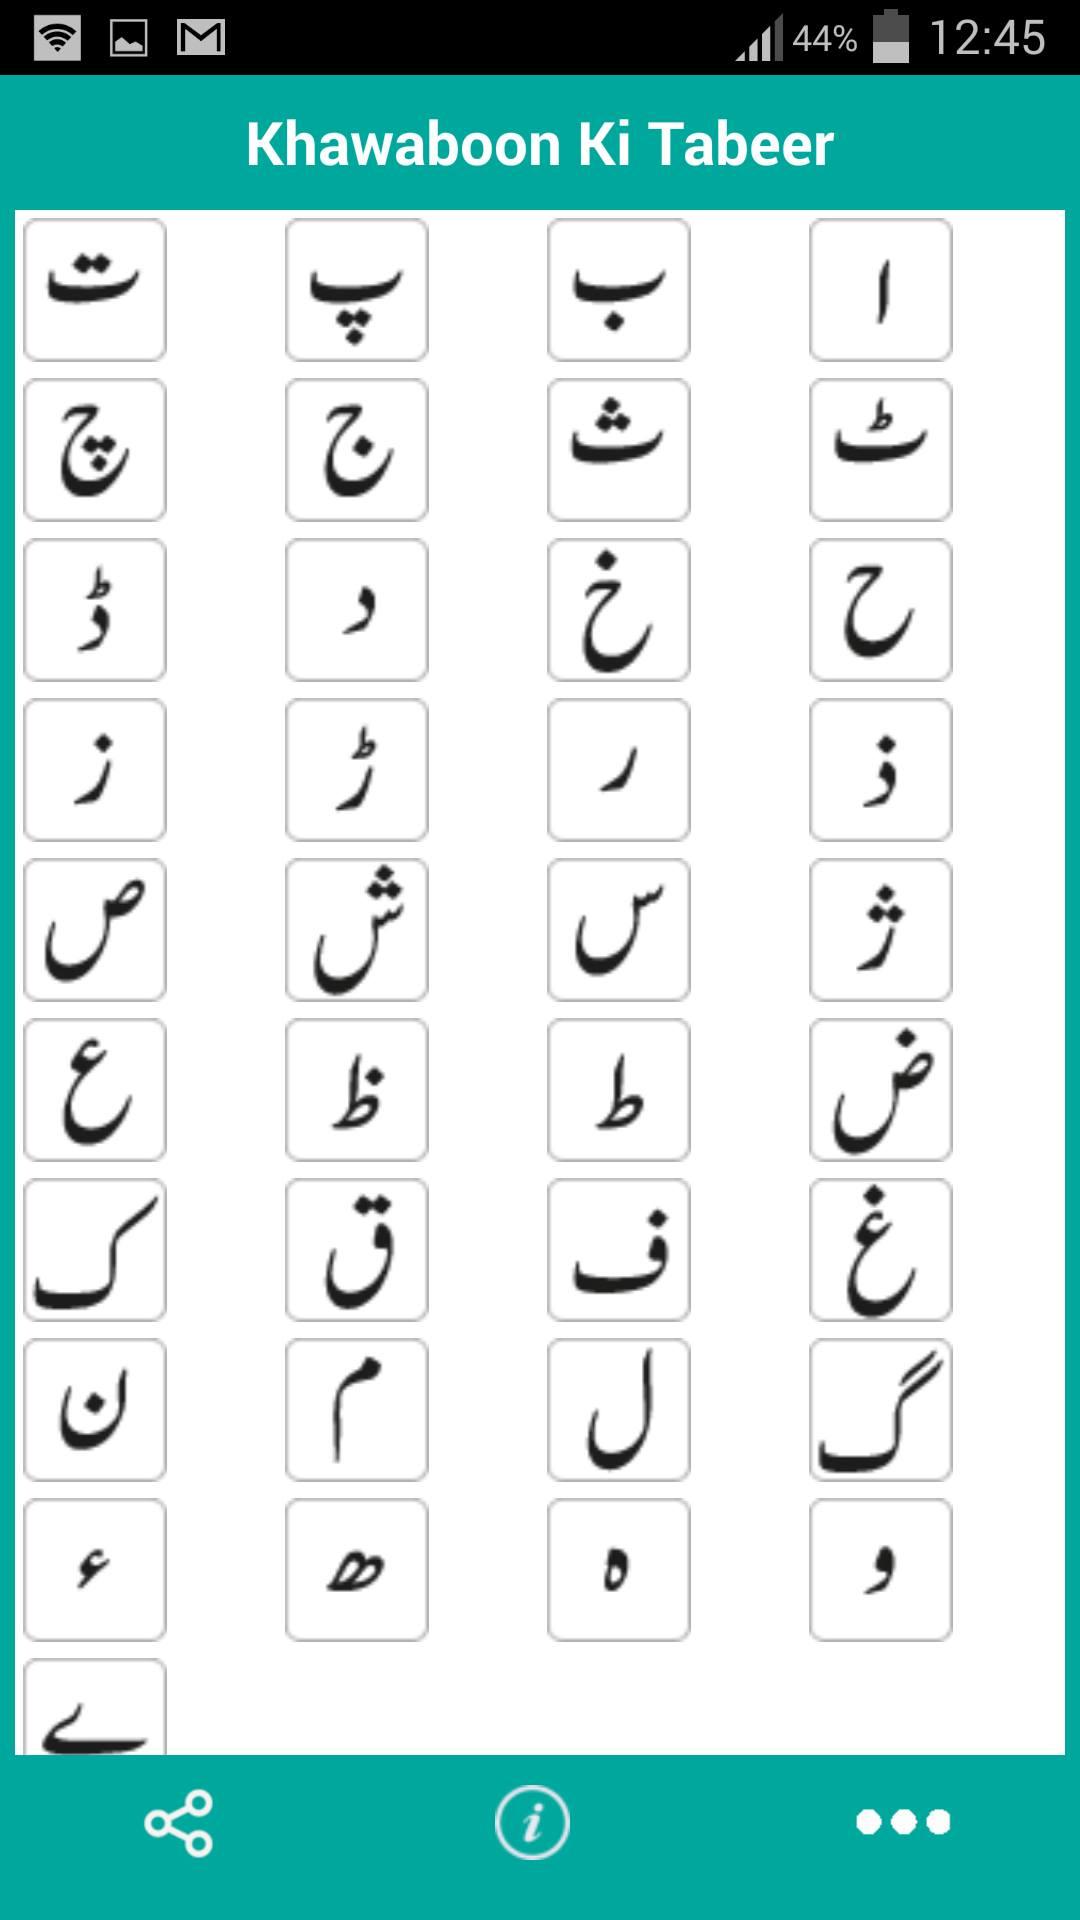 Khwabon Ki Tabeer in Urdu APK for Android Download